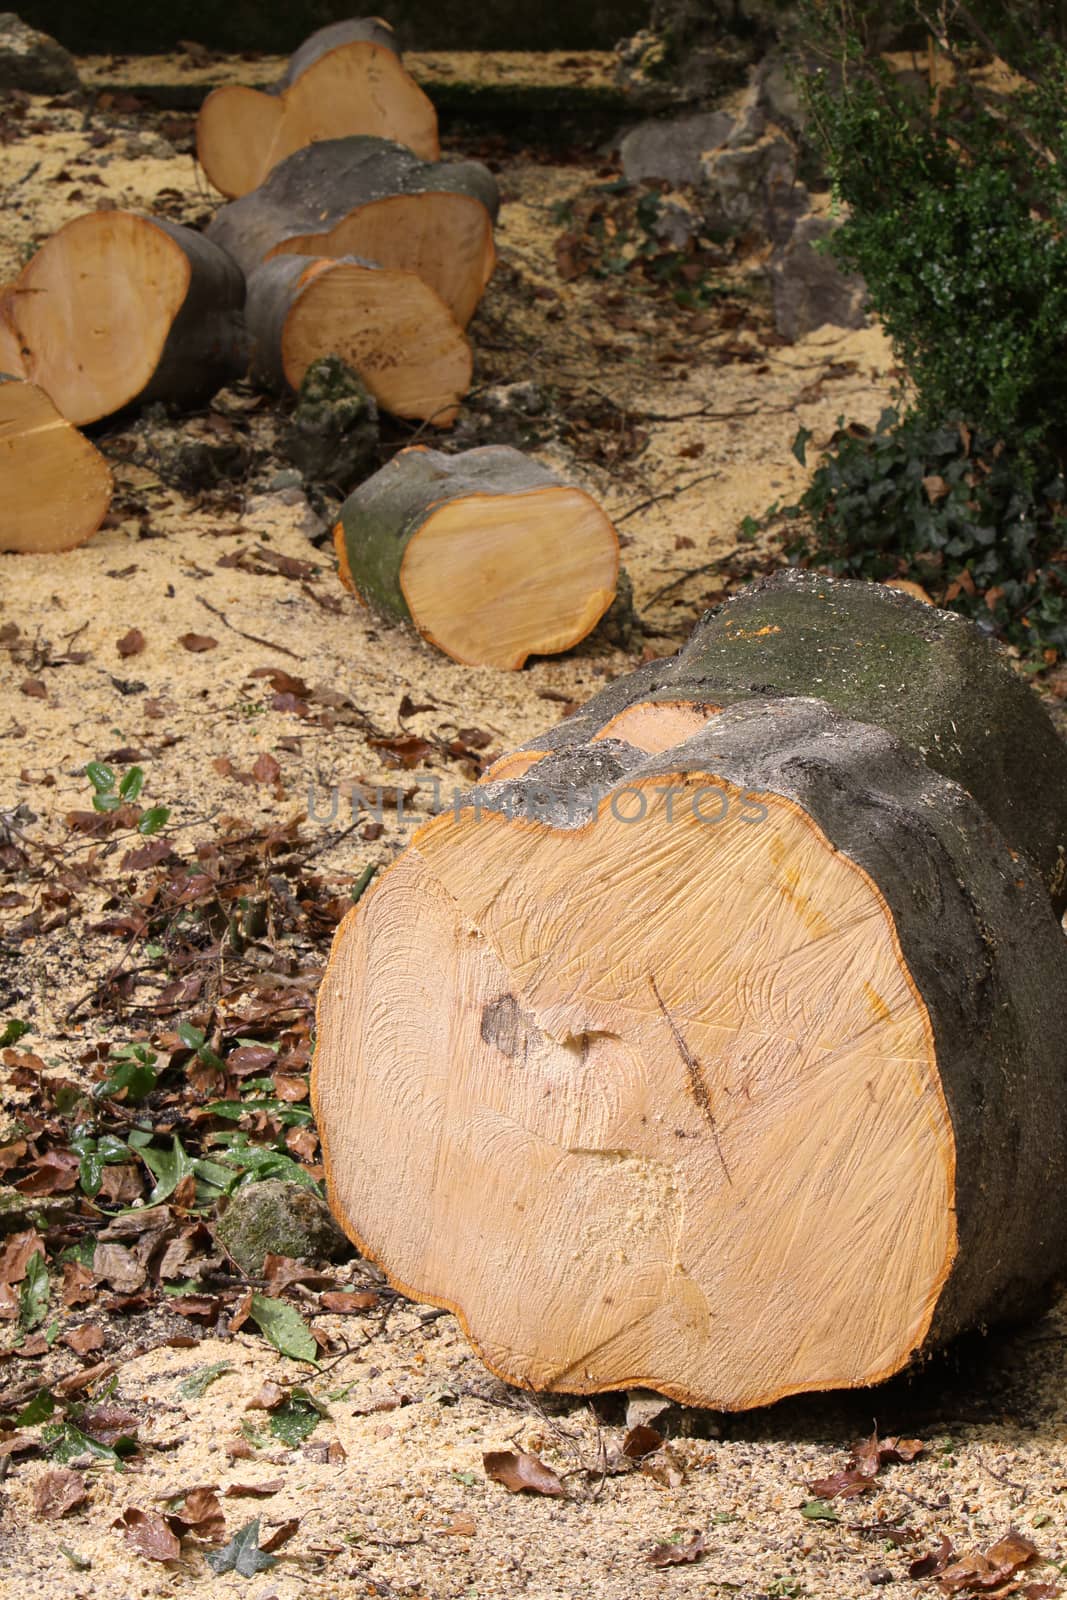 Plenty of chooped wood lying around